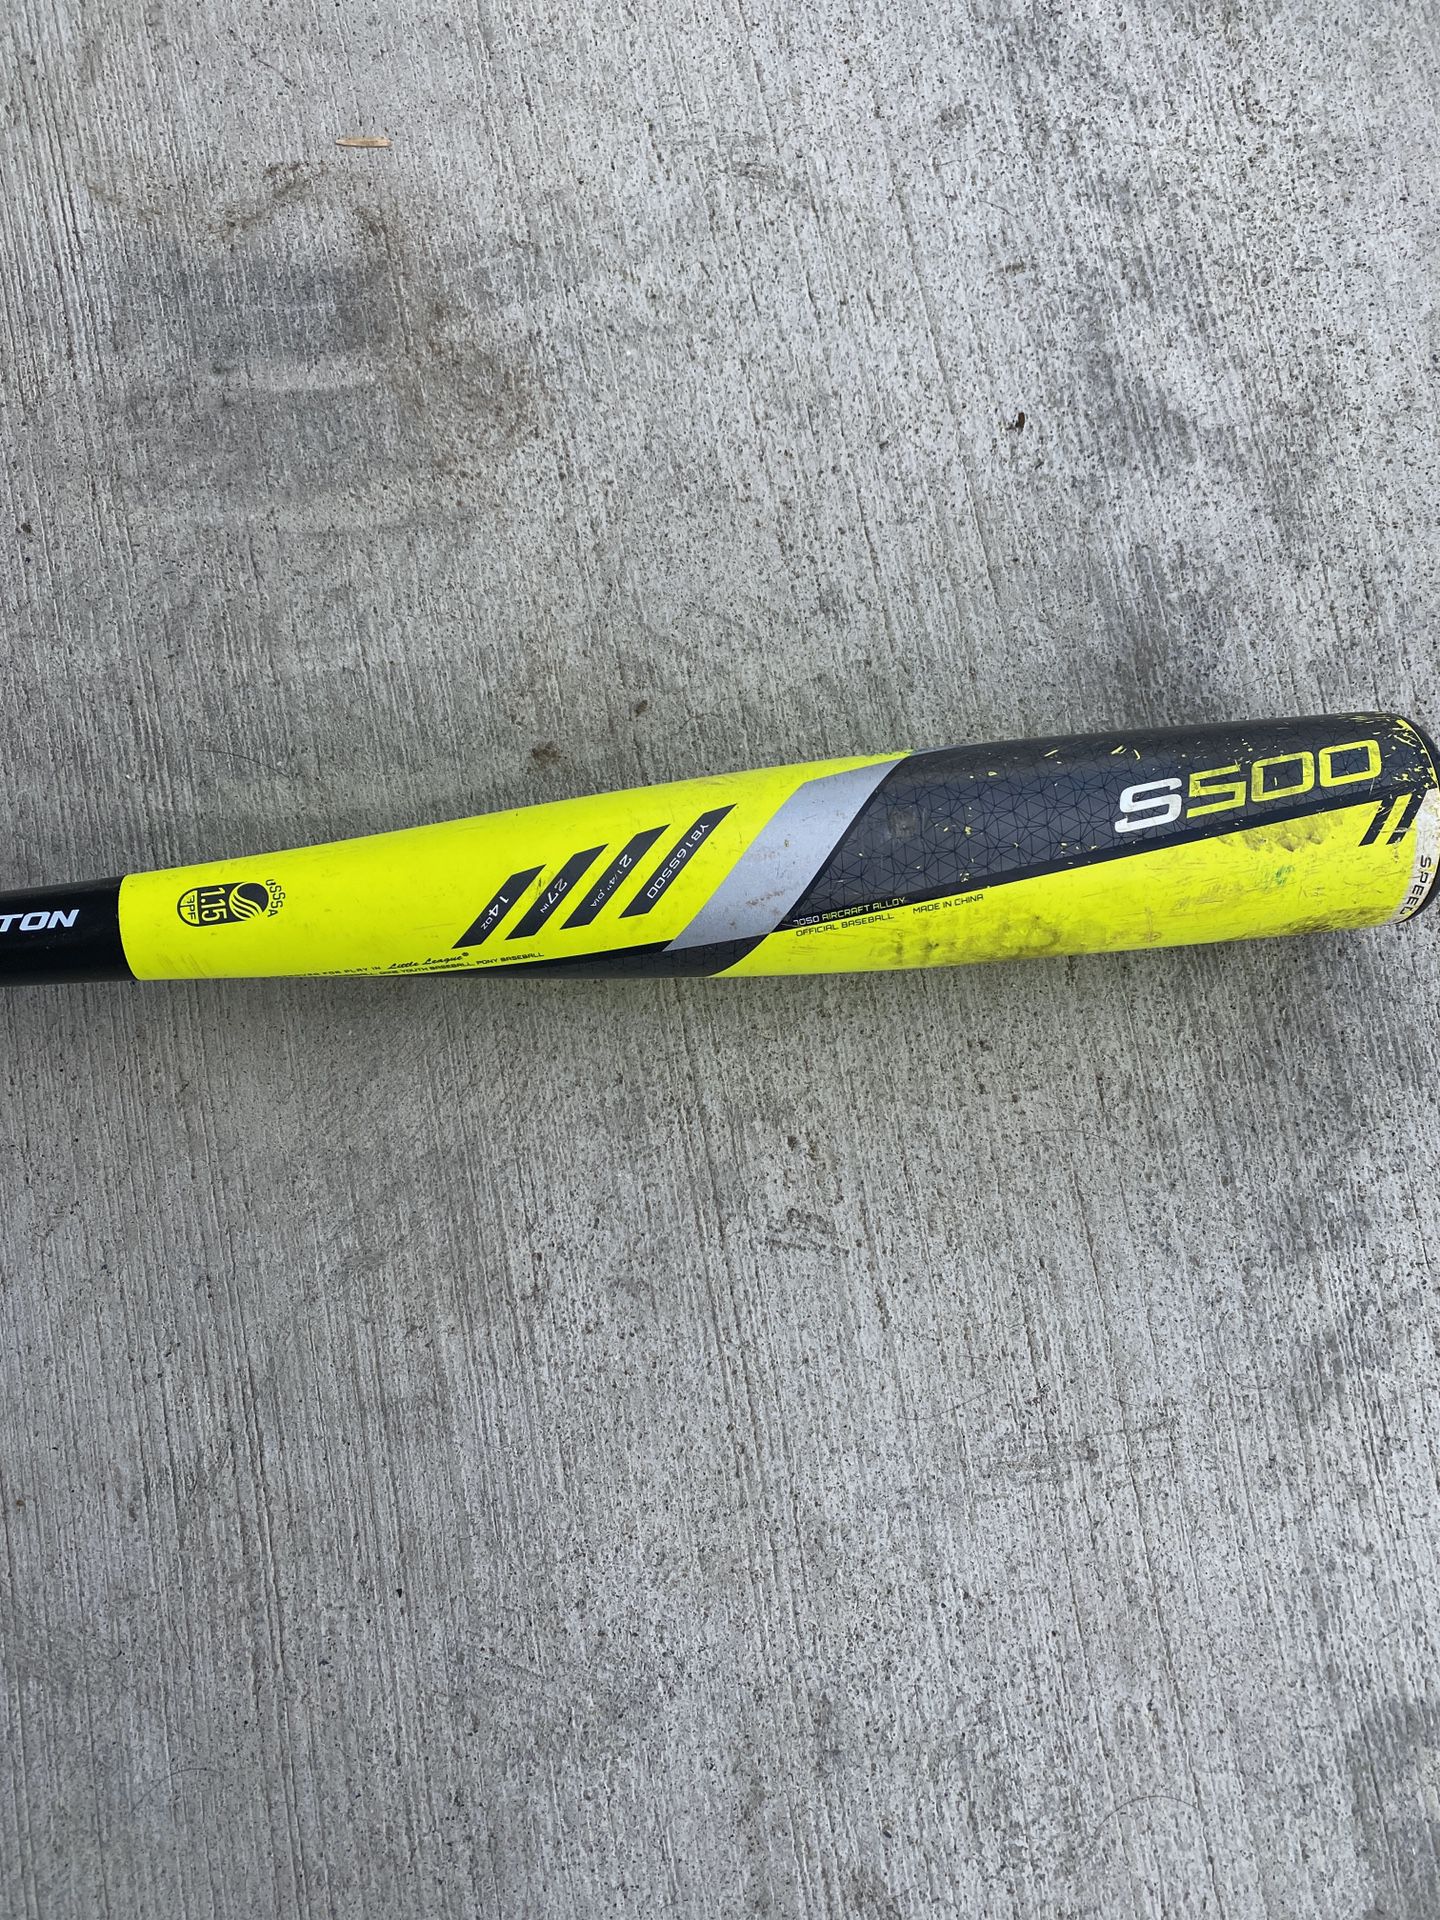 Easton S500 Youth Baseball Bat